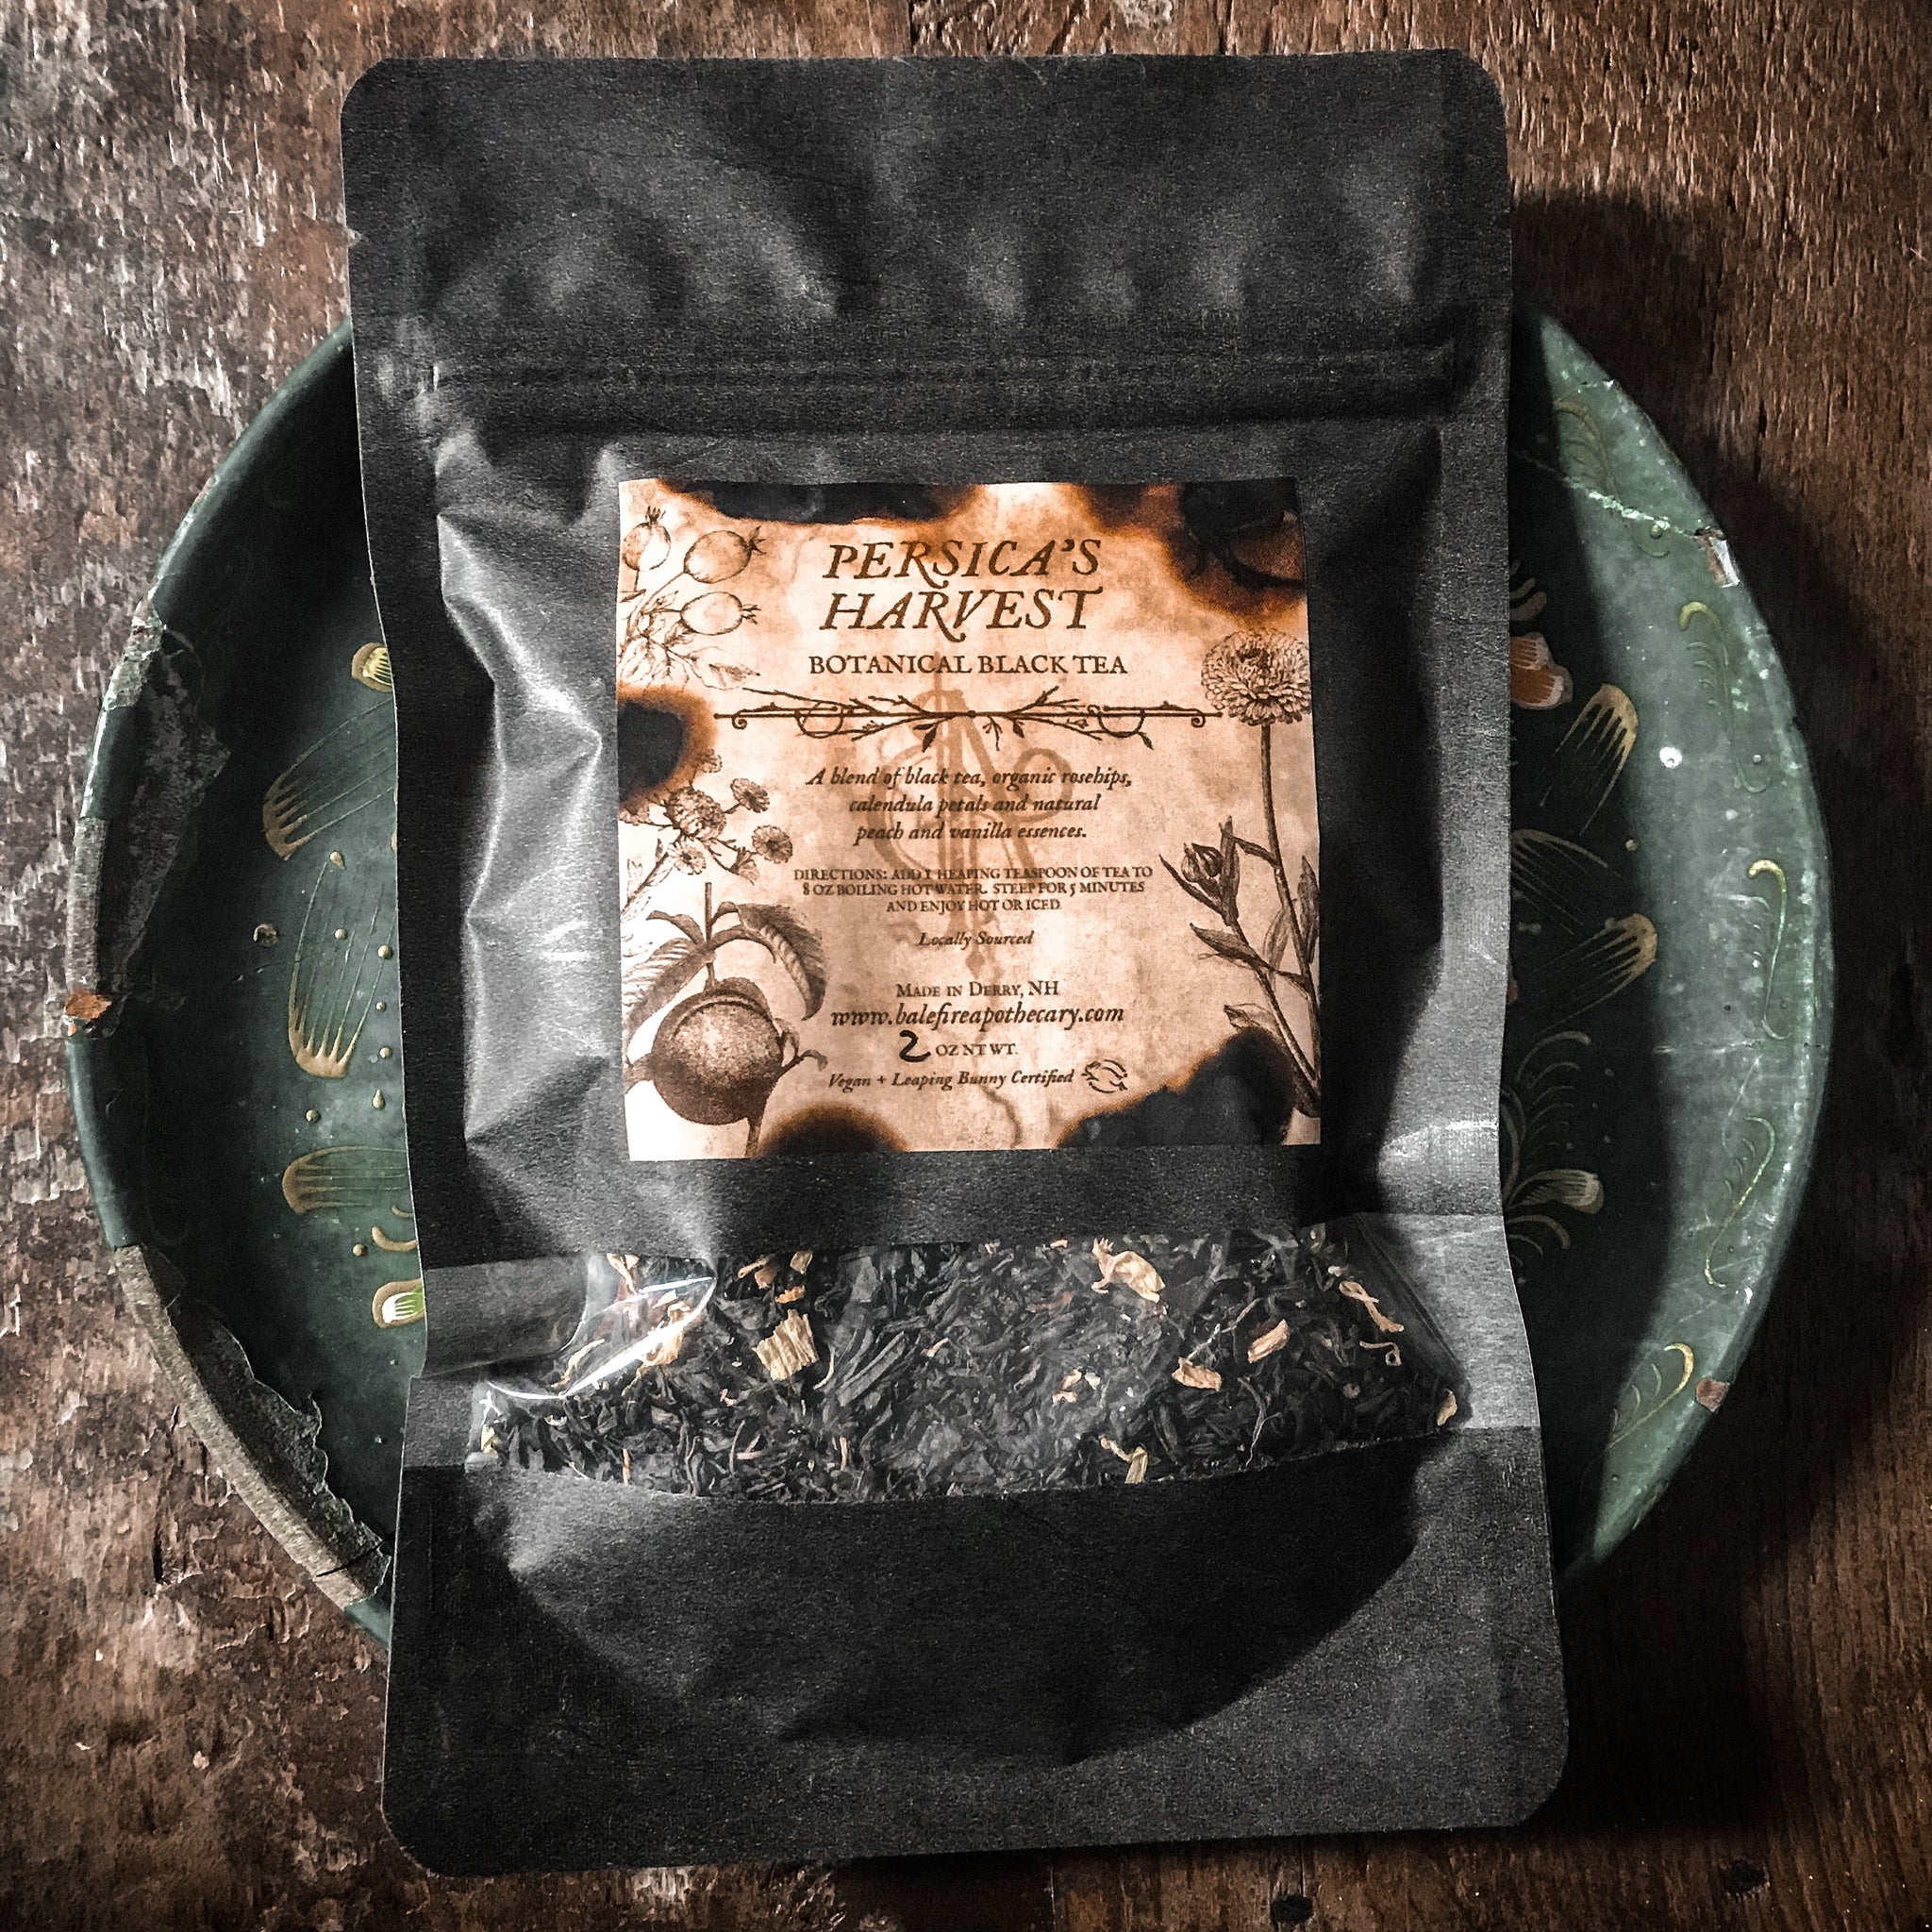 Persica's Harvest Botanical Black Tea